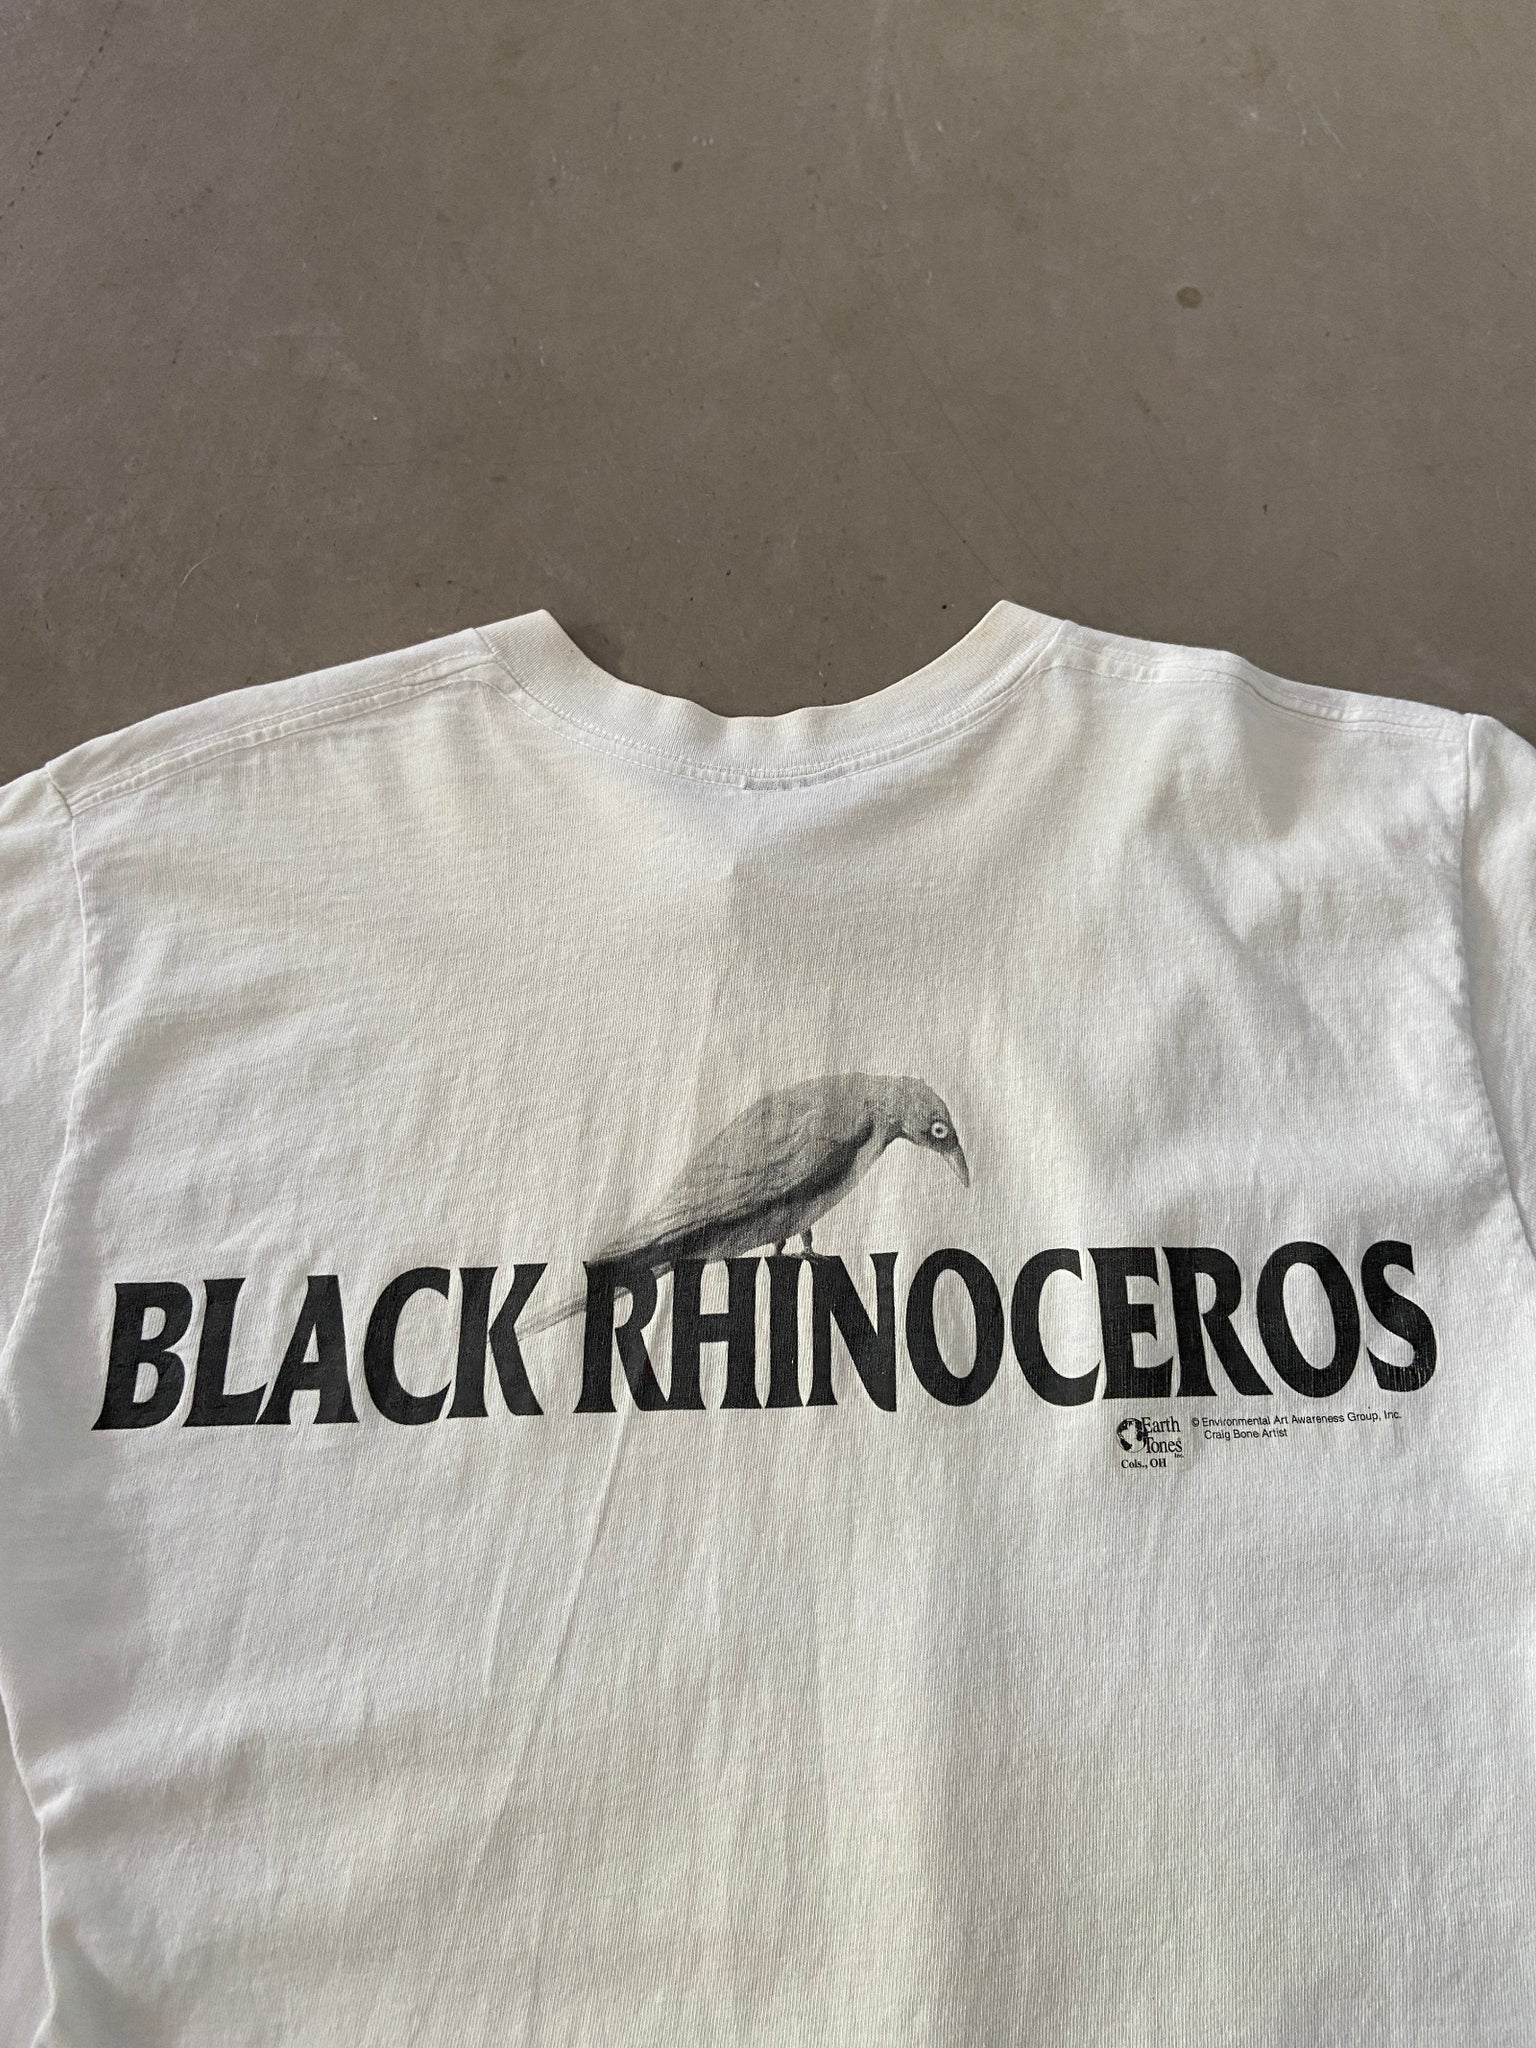 Diceros Bicornis T-shirt - M